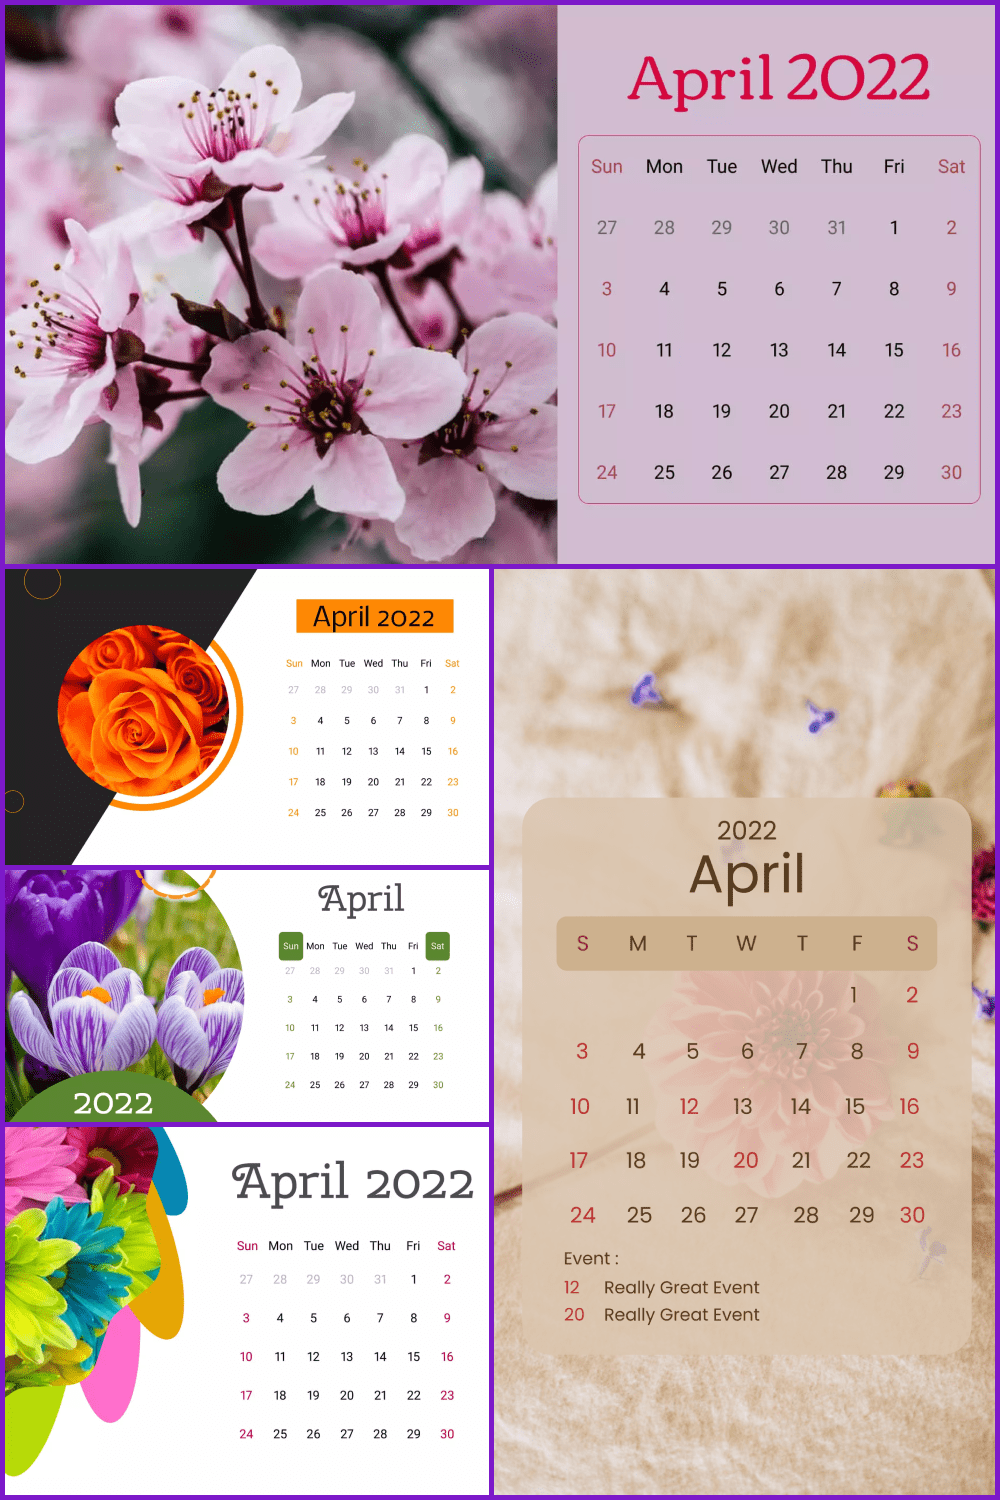 Cool april 2022 calendars pinterest.